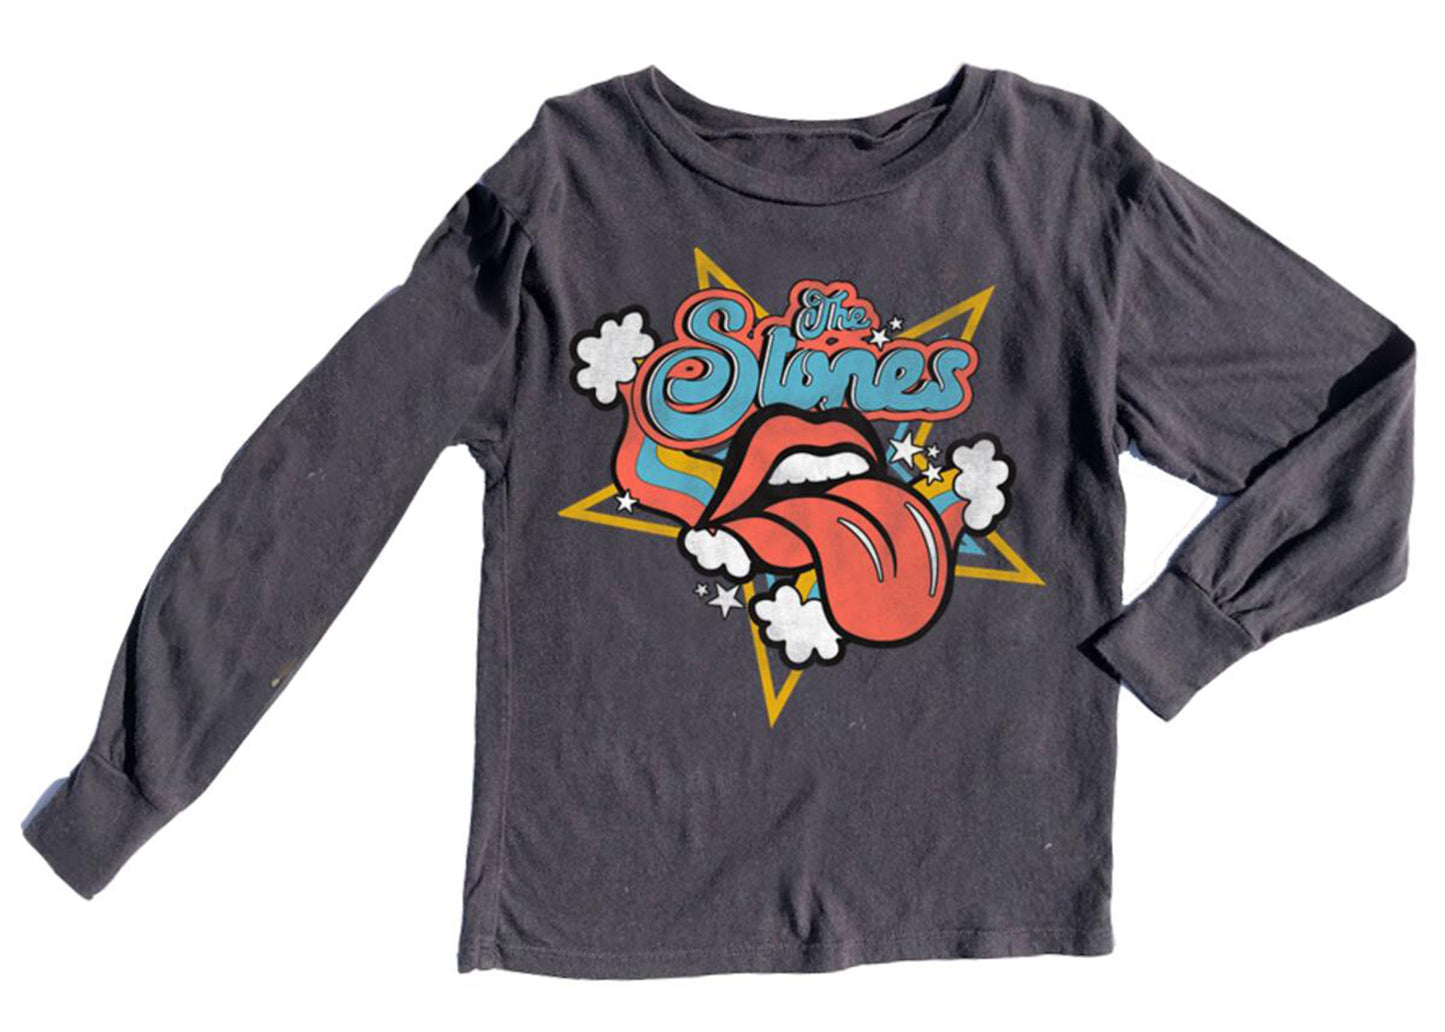 The Stones Rolling Stones Long Sleeve Kids Tee